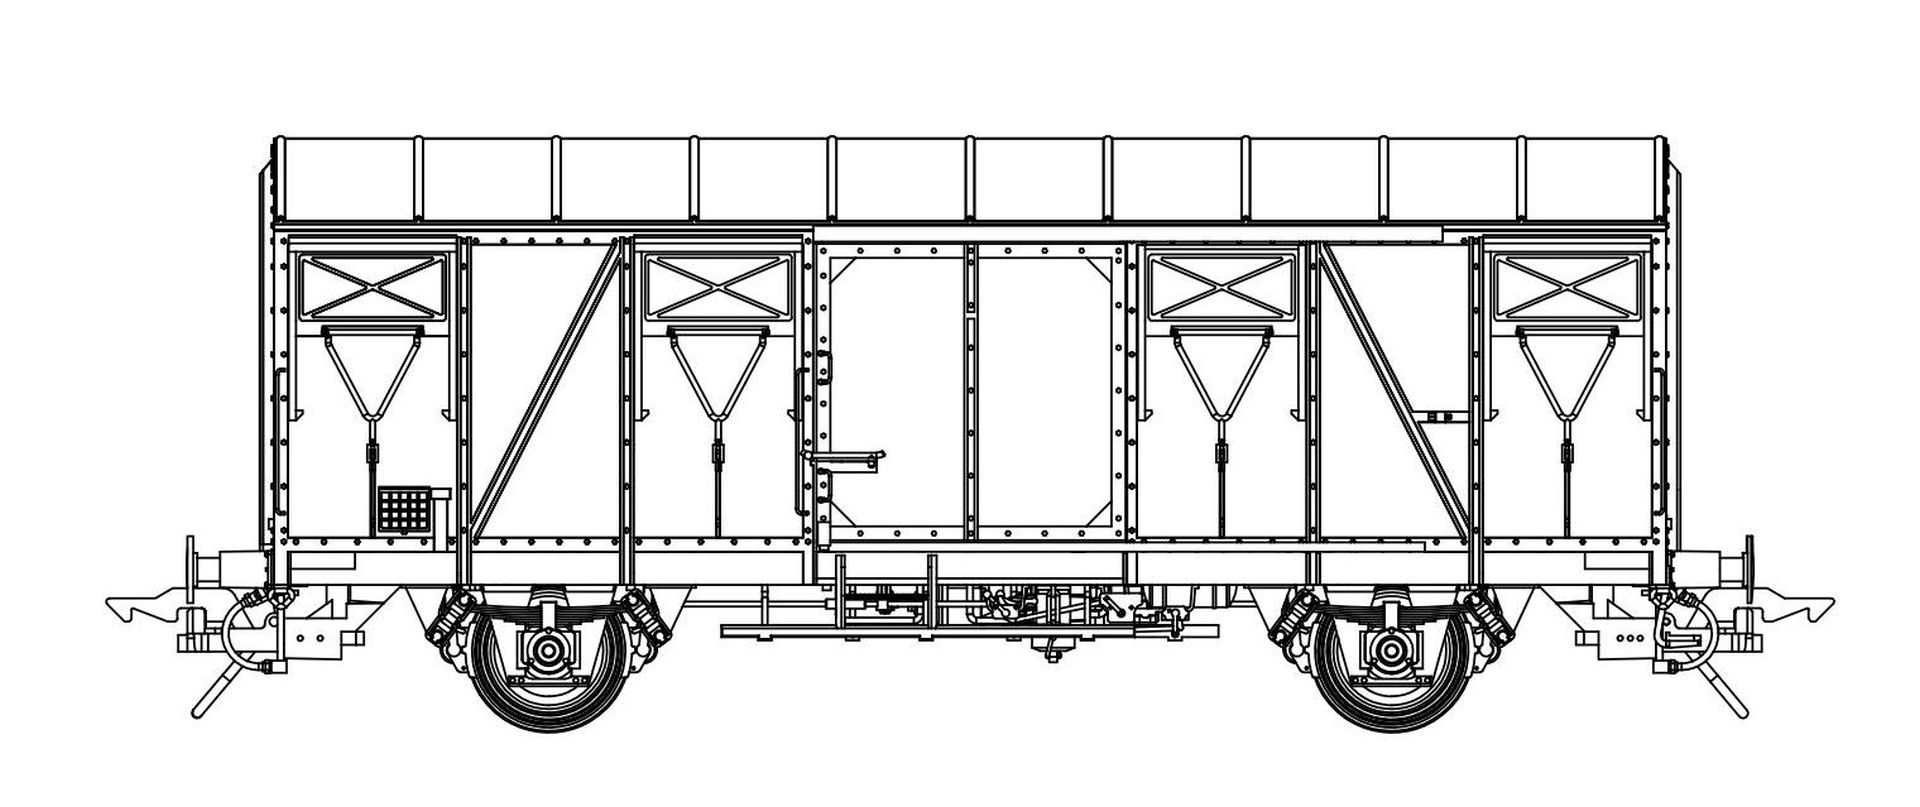 Lenz 42242-03 - Güterwagen Gs(-uv) 212, DB, Ep.IV, 125 2 313-2